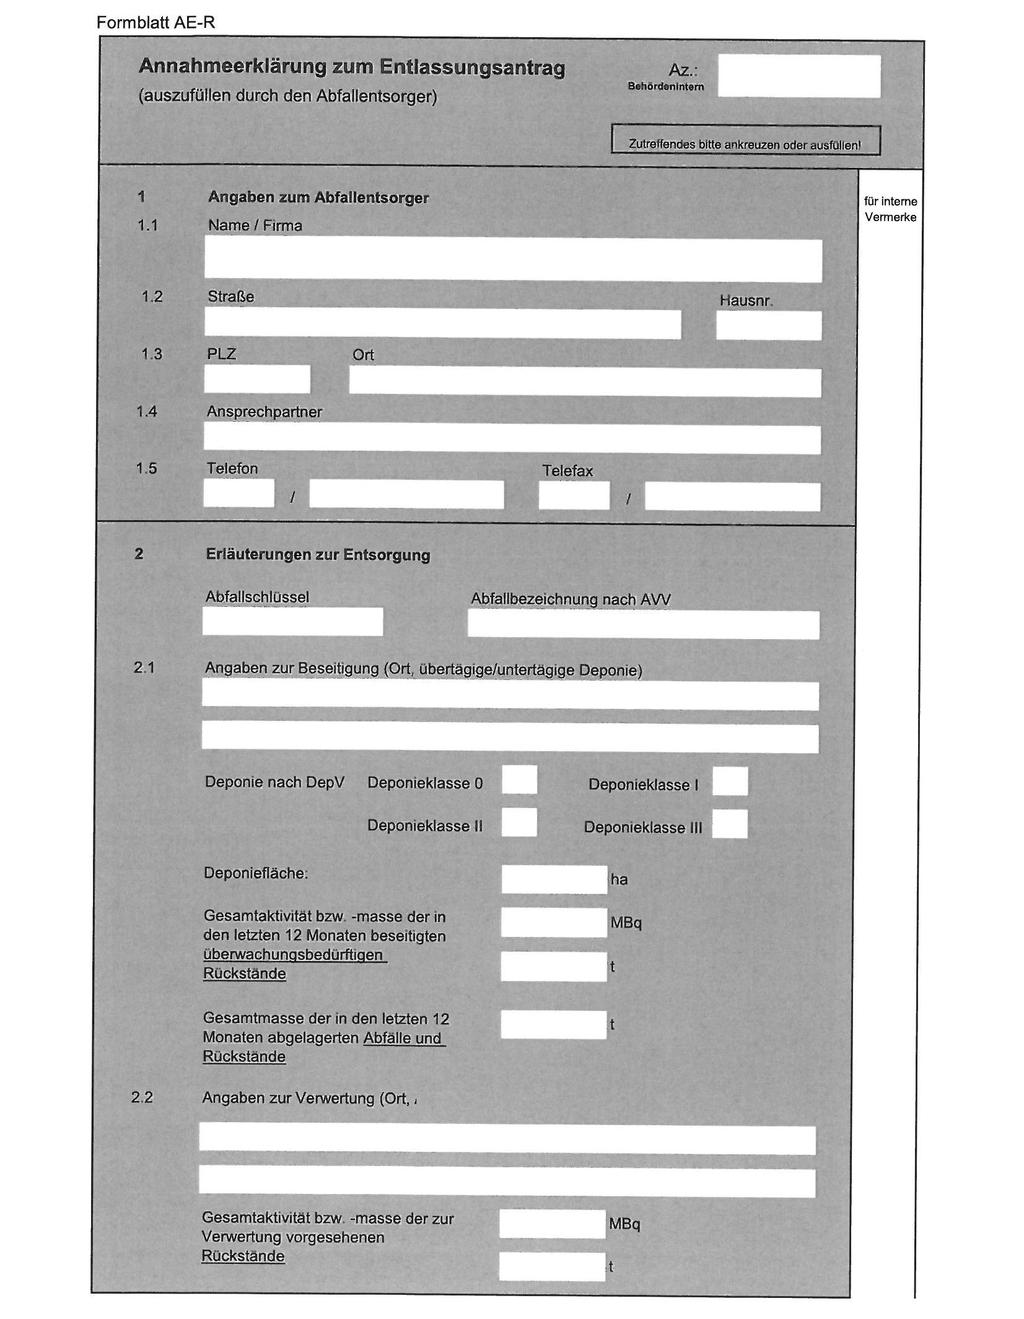 9.3.3 Formblatt AE-R: Annahmeerklärung zu Entlassungsantrag Quelle: http://www.umwelt.sachsen.